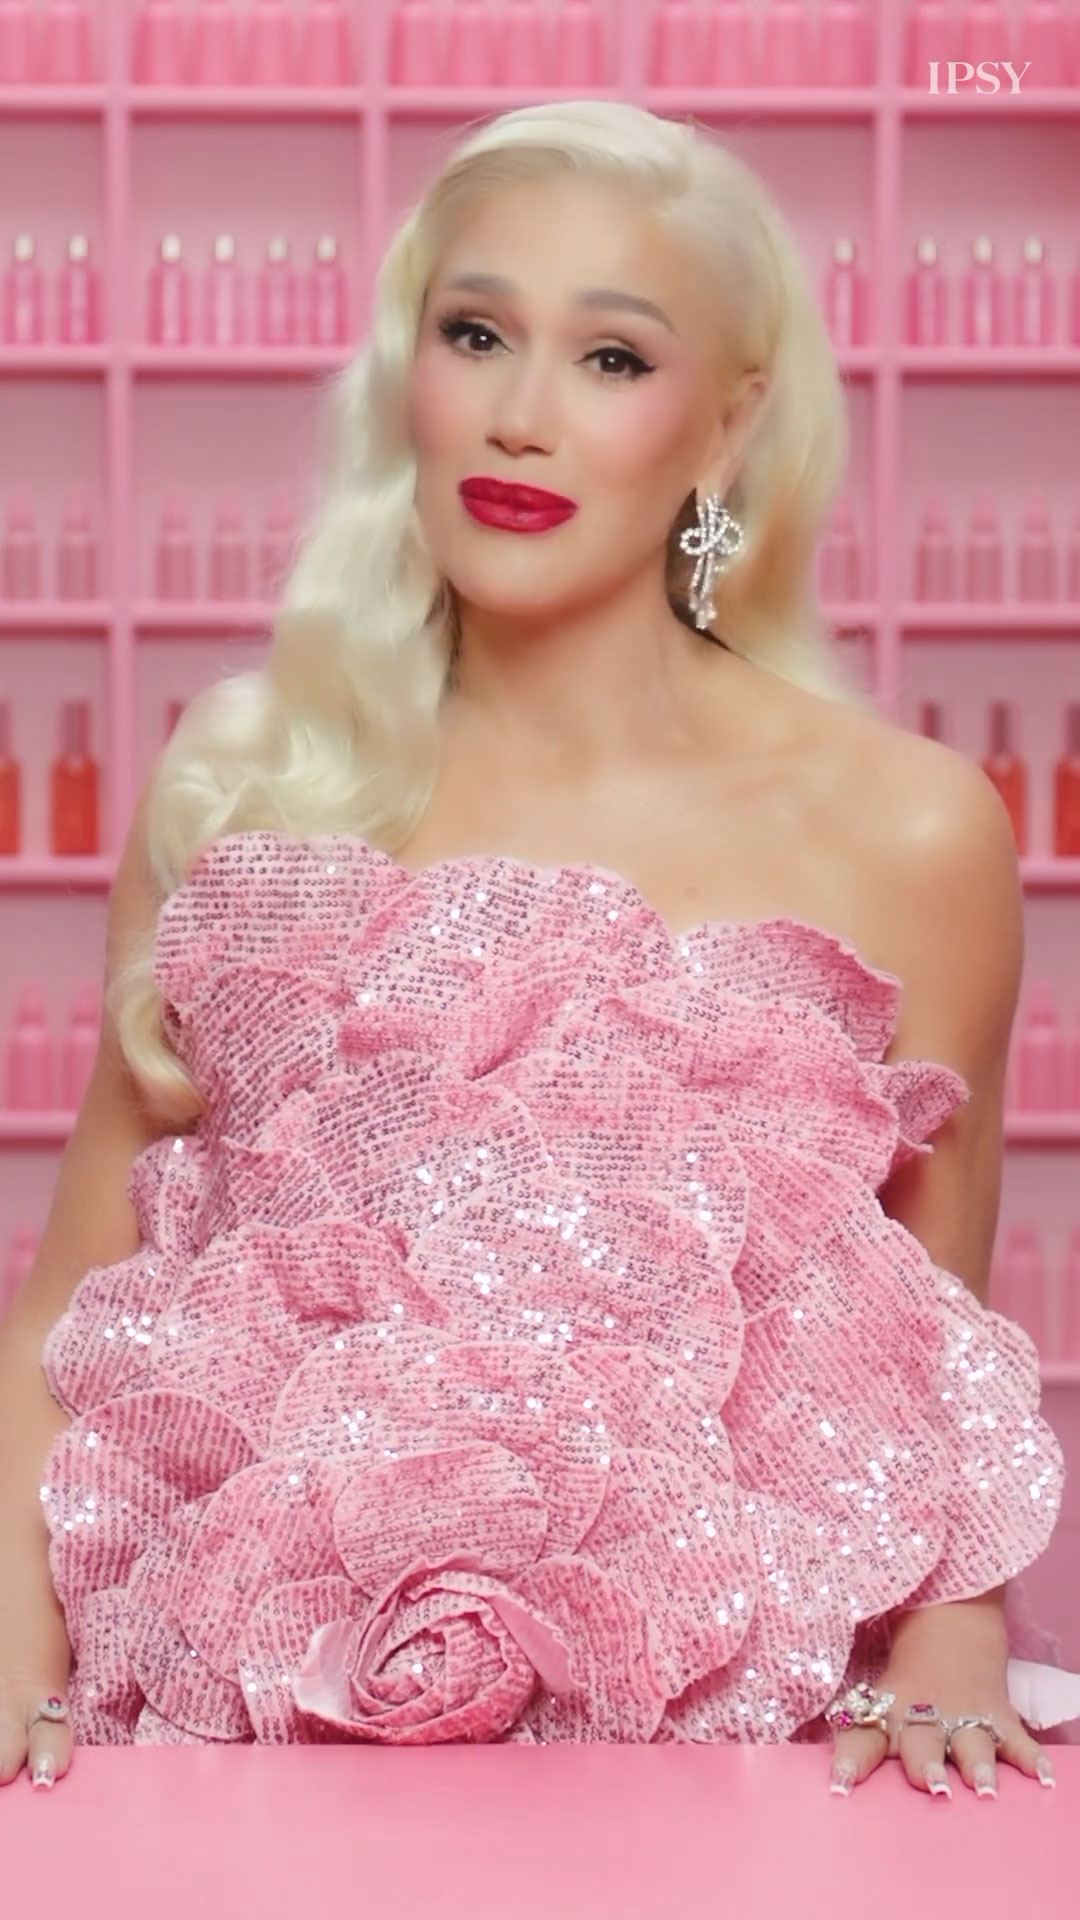 Gwen Stefani pink dress Ipsy collaboration